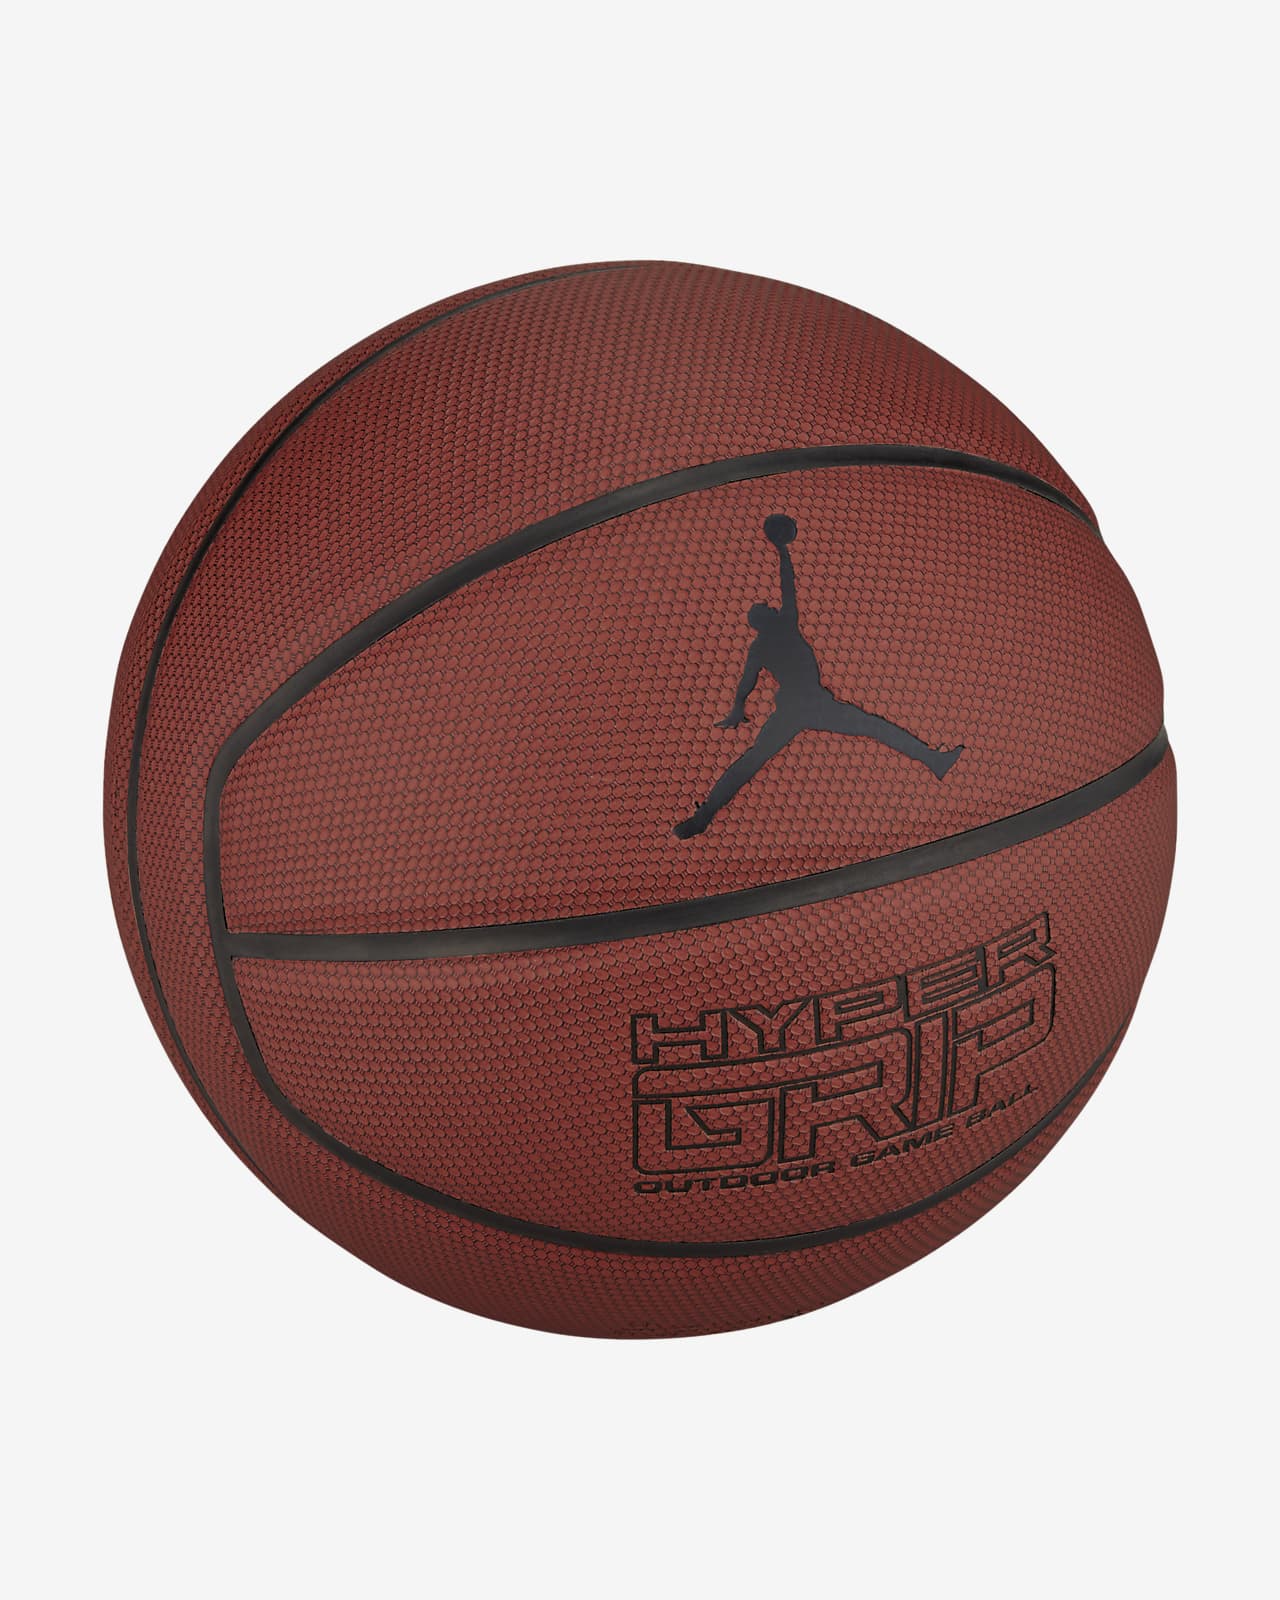 Jordan HyperGrip 4P Basketball (Size 7 